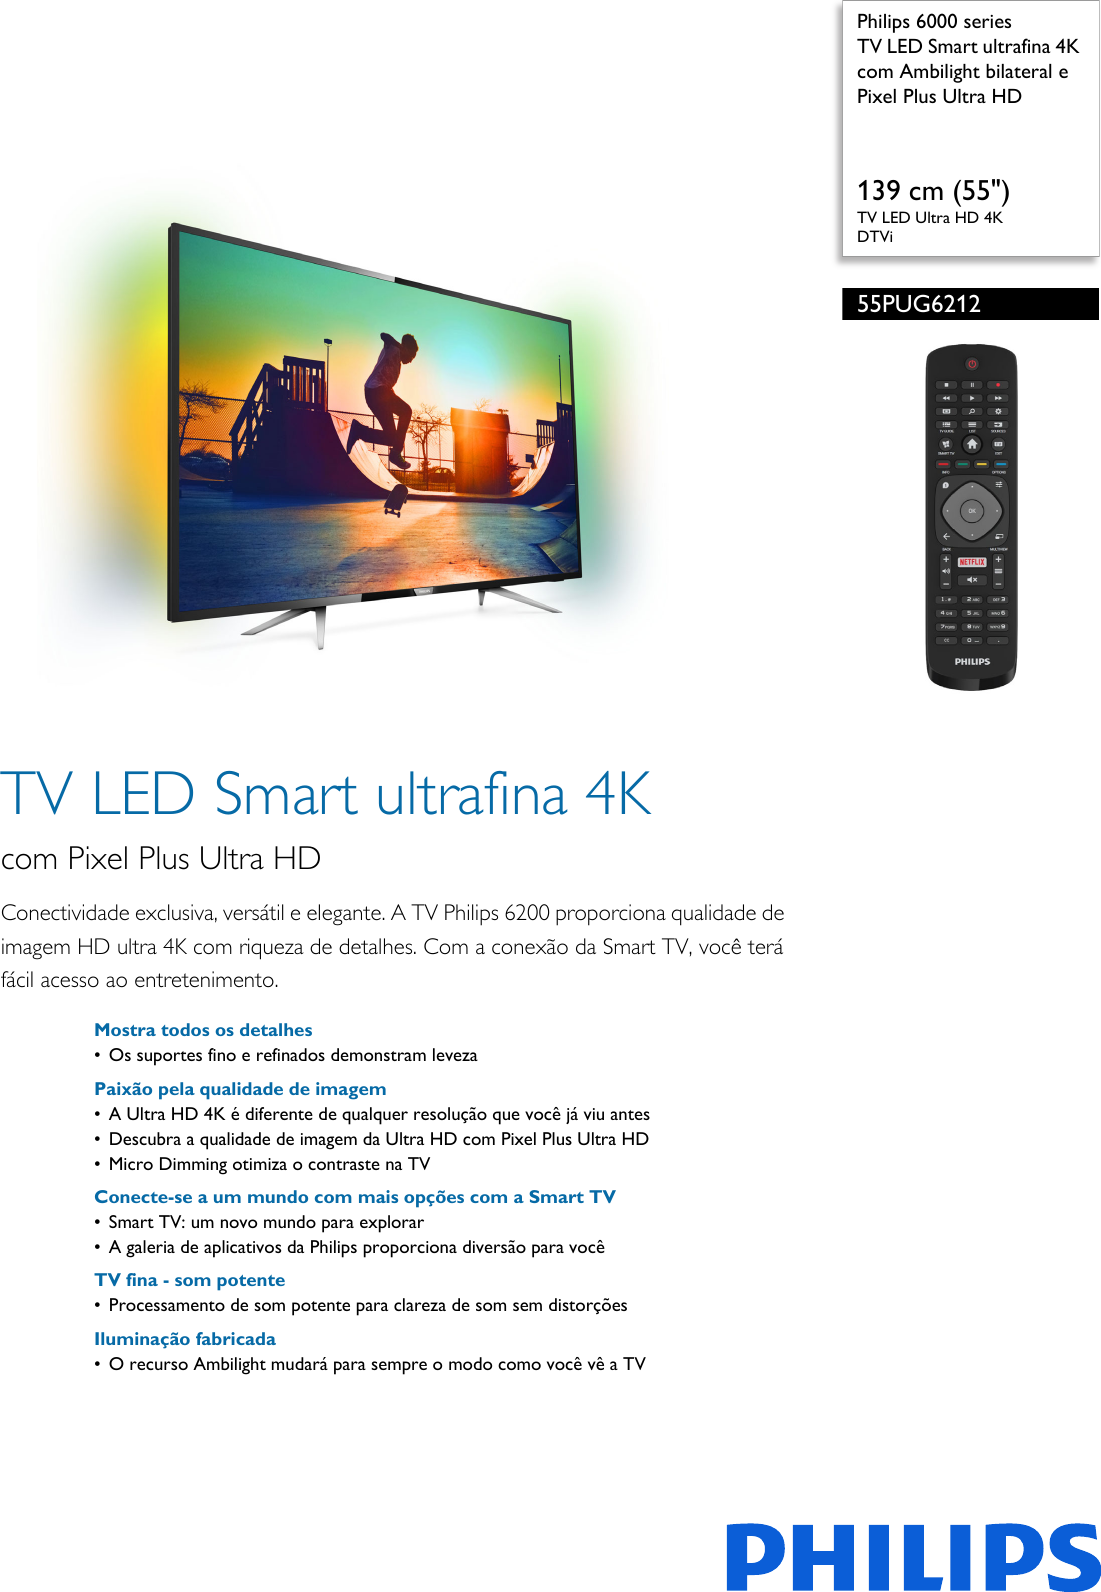 Page 1 of 3 - Philips 55PUG6212/78 TV LED Smart Ultrafina 4K Com Ambilight Bilateral E Pixel Plus Ultra HD User Manual Folheto 55pug6212 78 Pss Brpbr